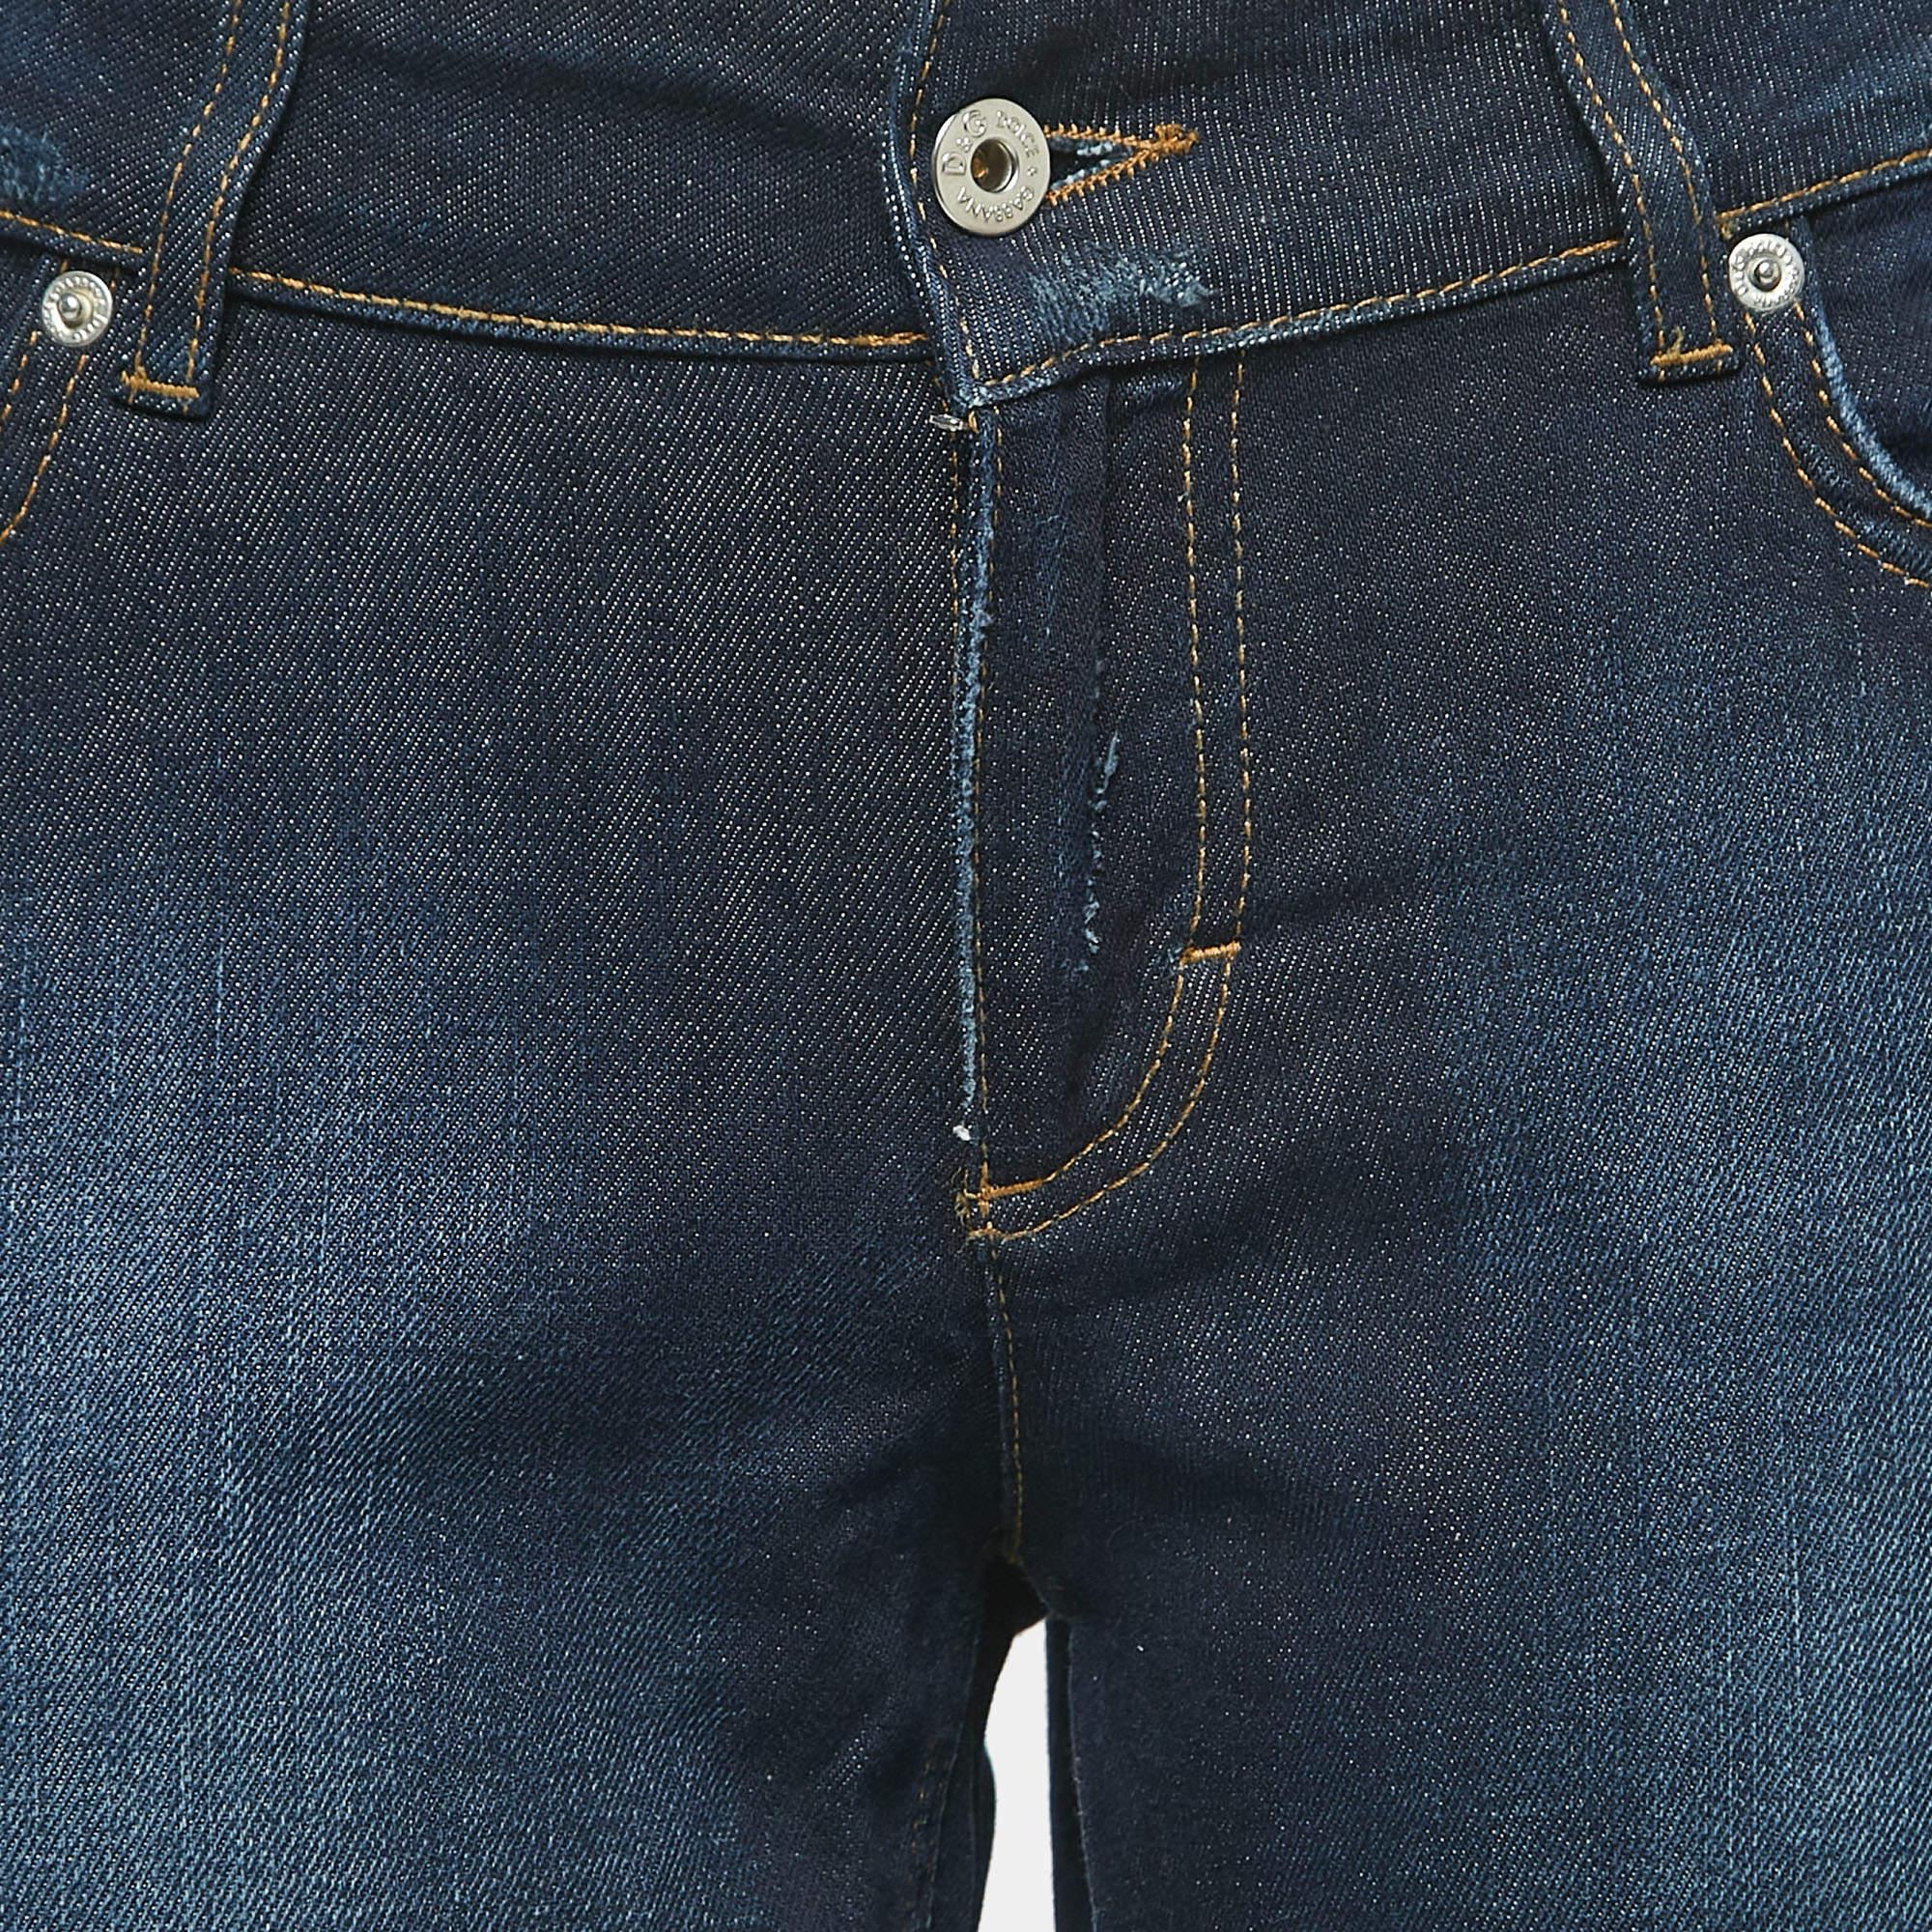 D&G Dark Blue Distressed Denim Very Low Rise Boot-Cut Jeans M Waist 31